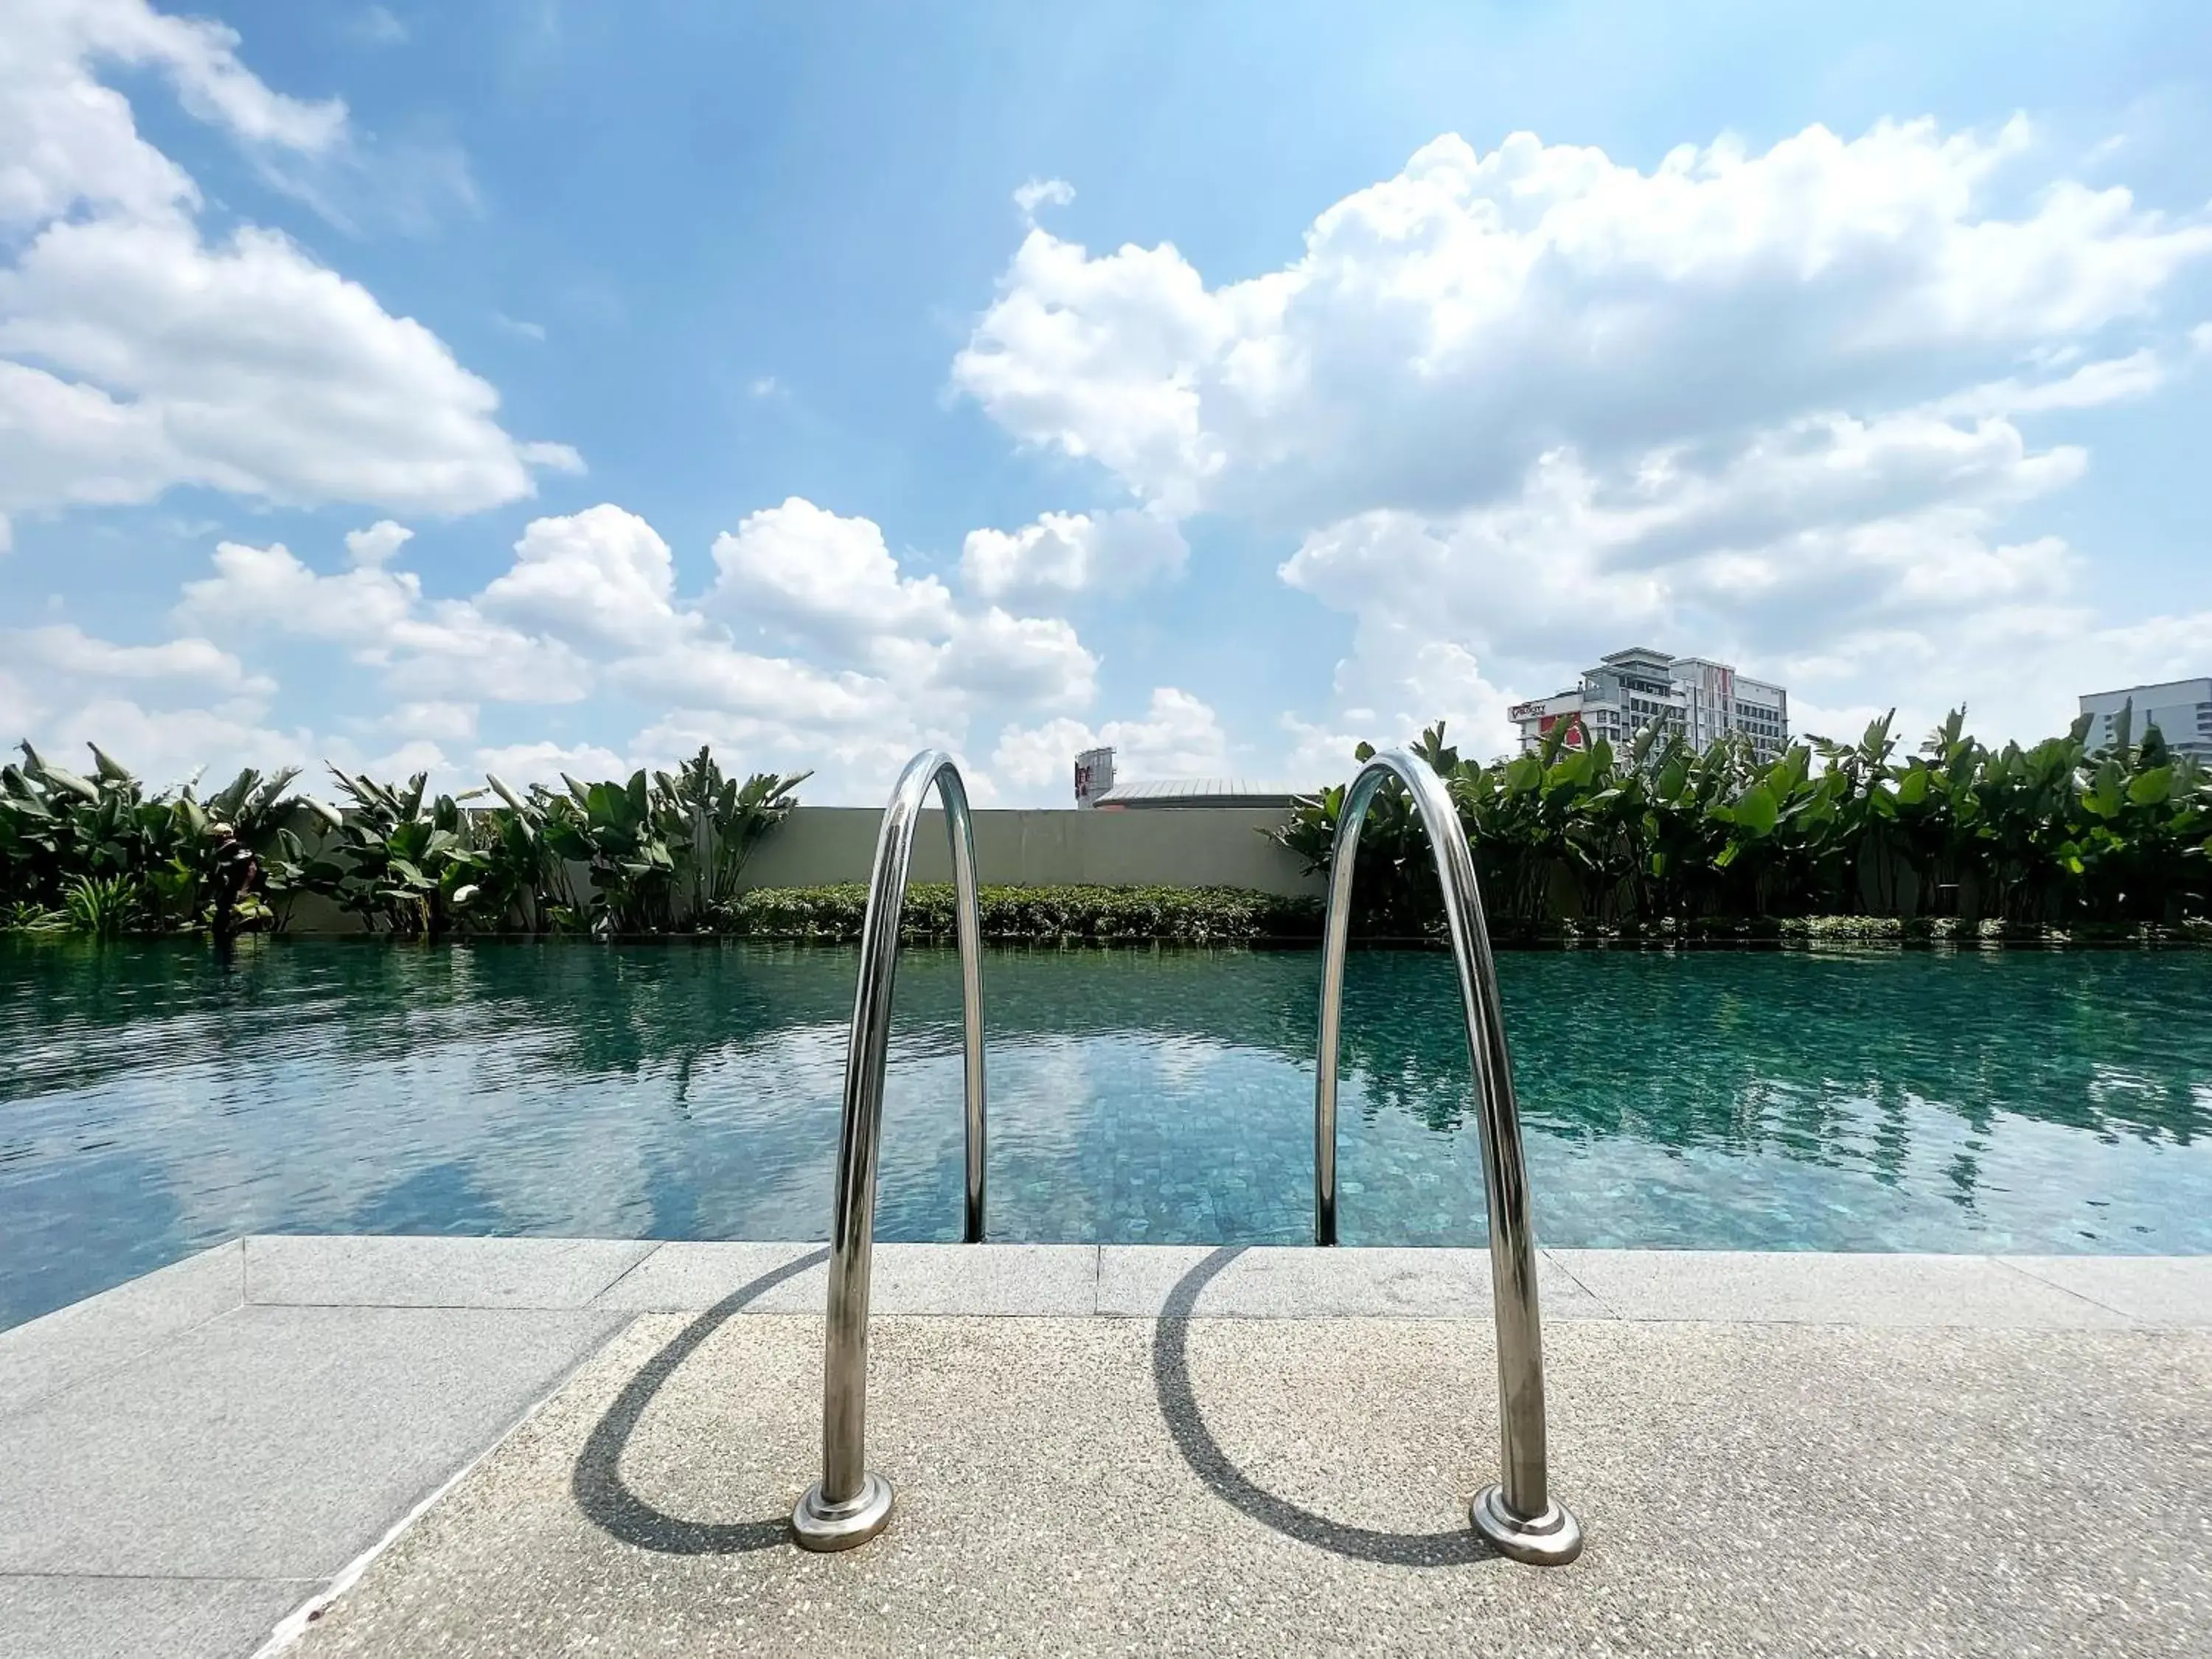 Swimming pool in Infini Suites@ UNA Residences, Sunway Velocity KL